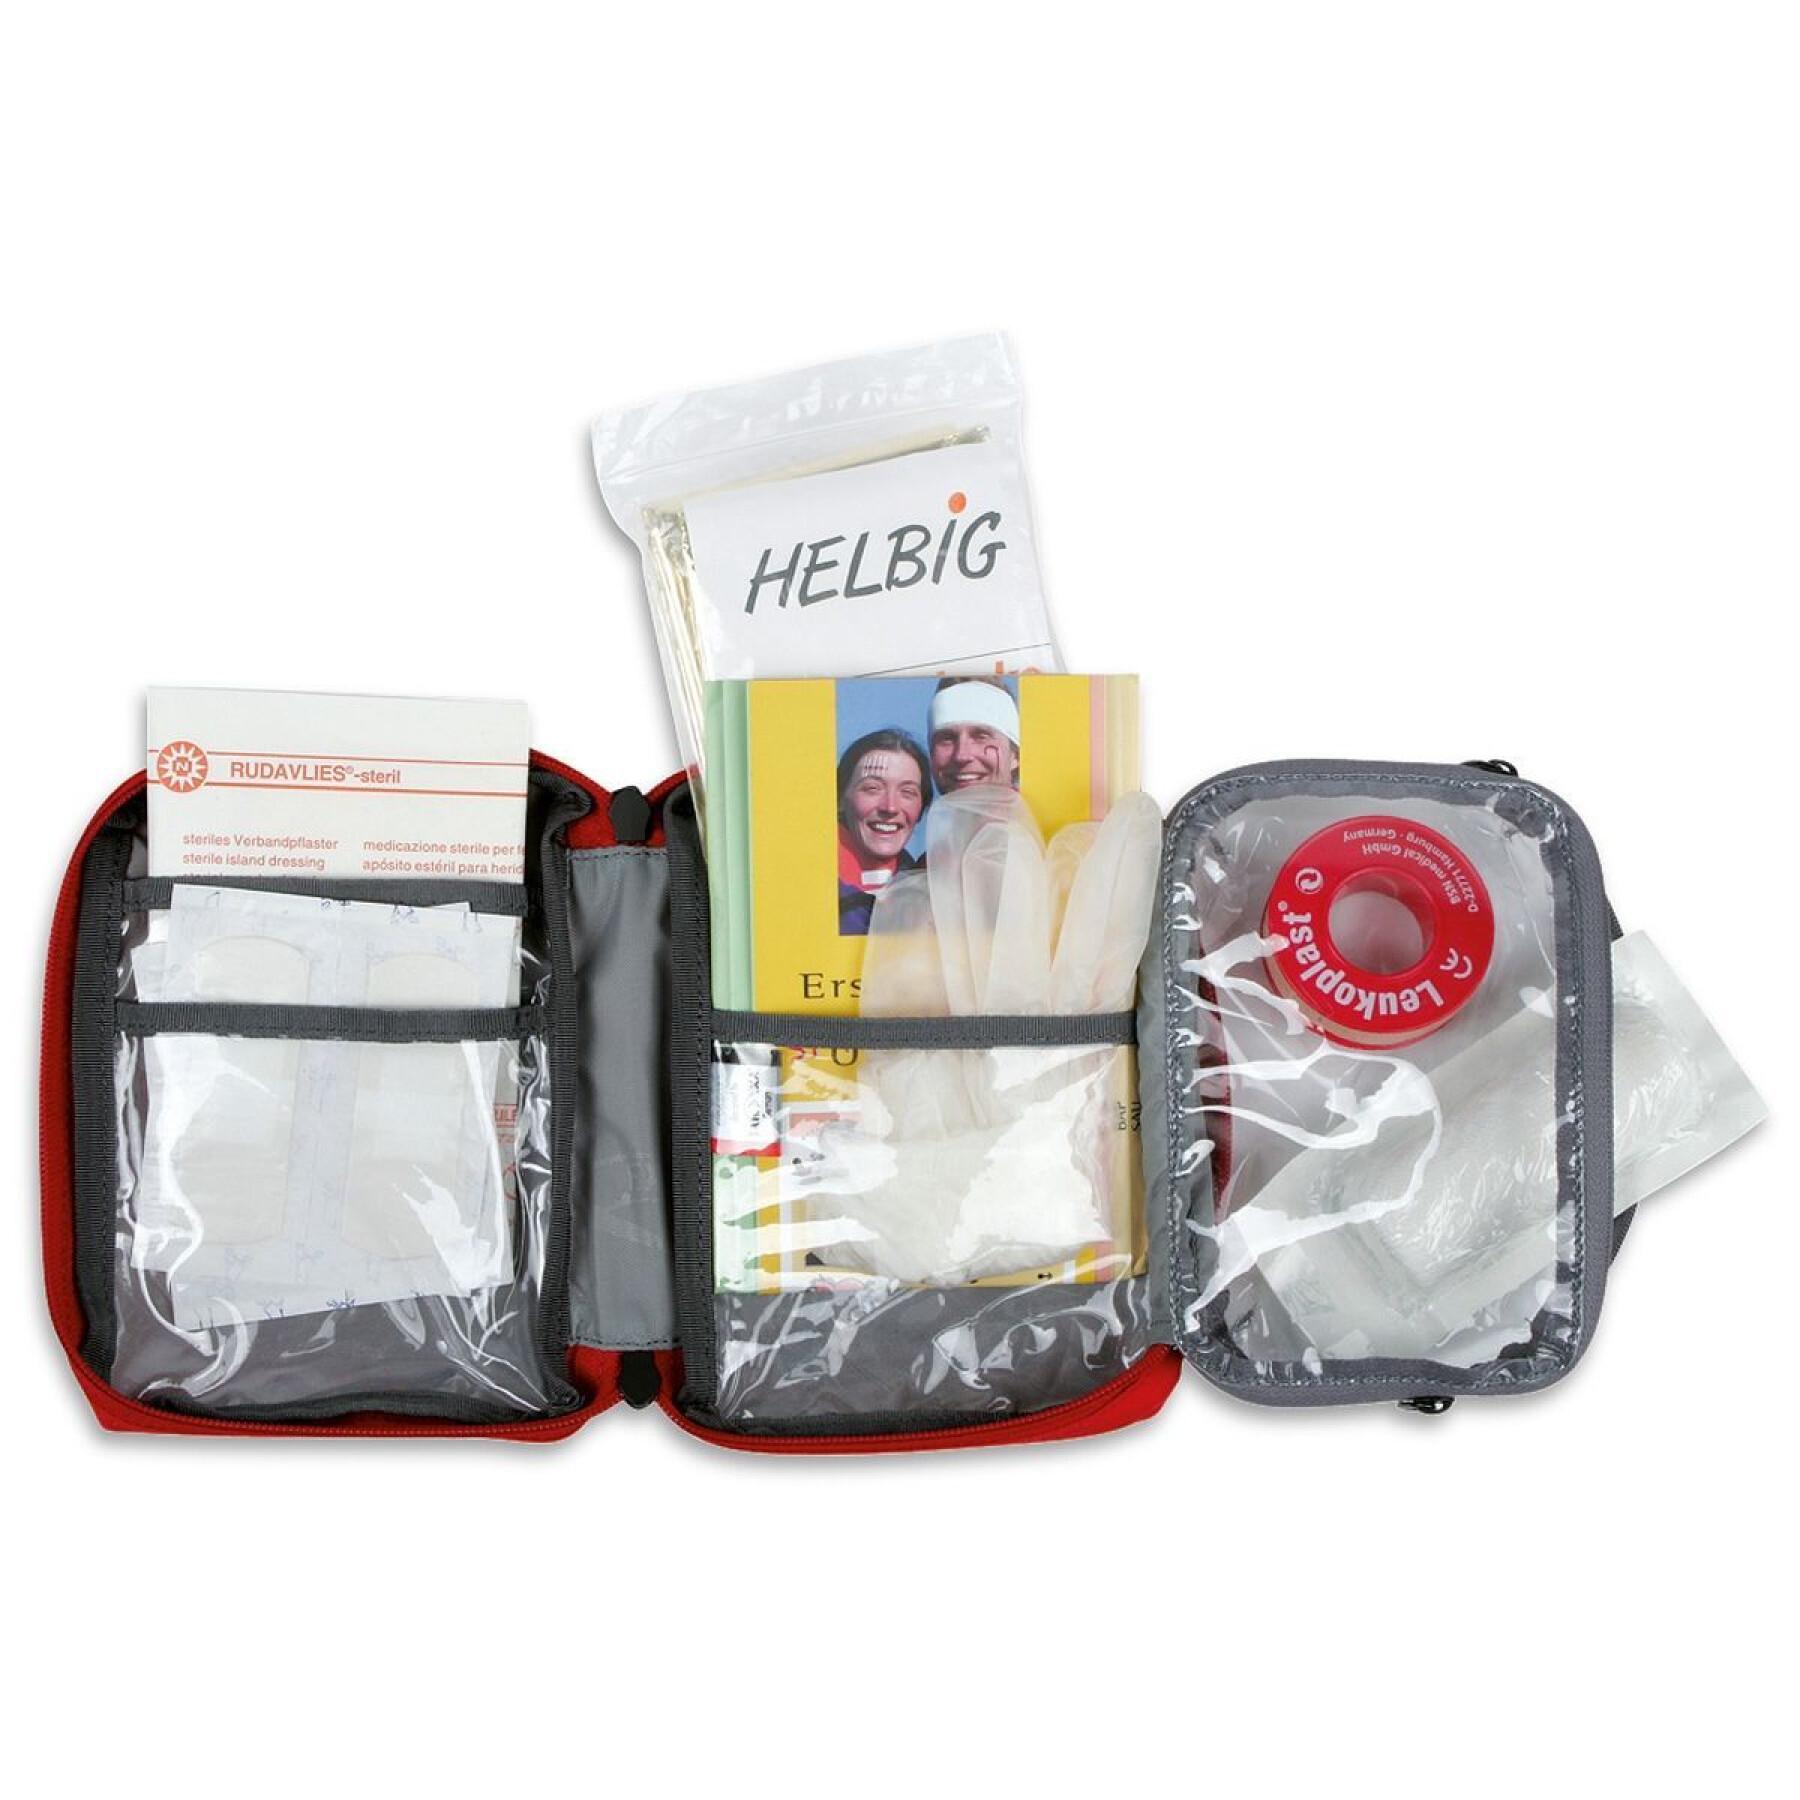 EHBO-kit voor 1 dag Tatonka First Aid Basic